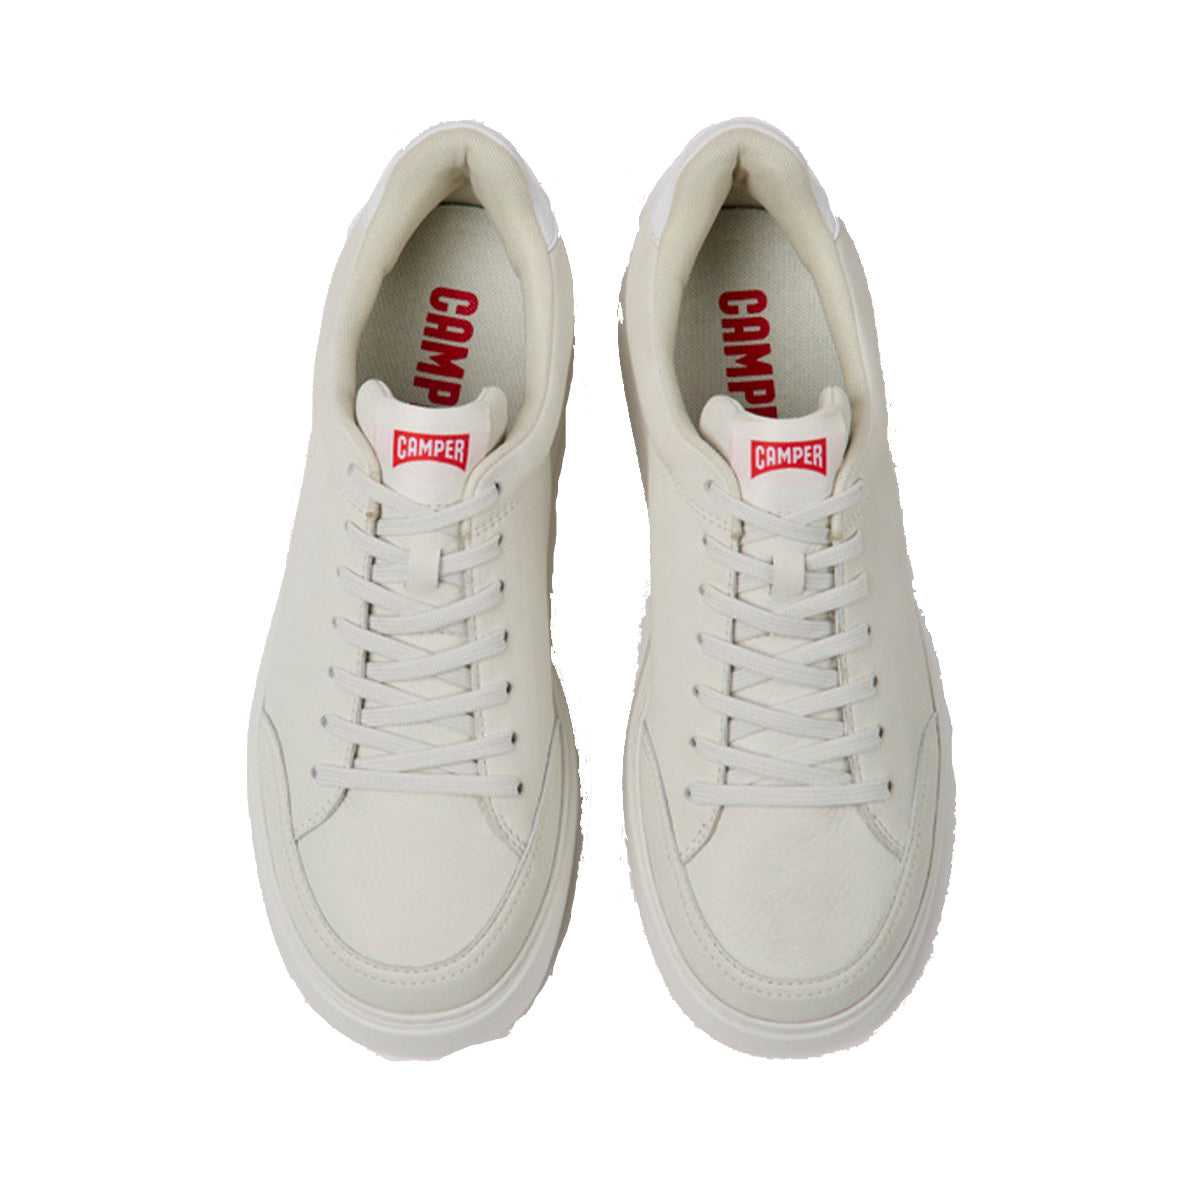 Camper Runner K21 White non-dyed leather sneakers for נעלי קמפר לגברים